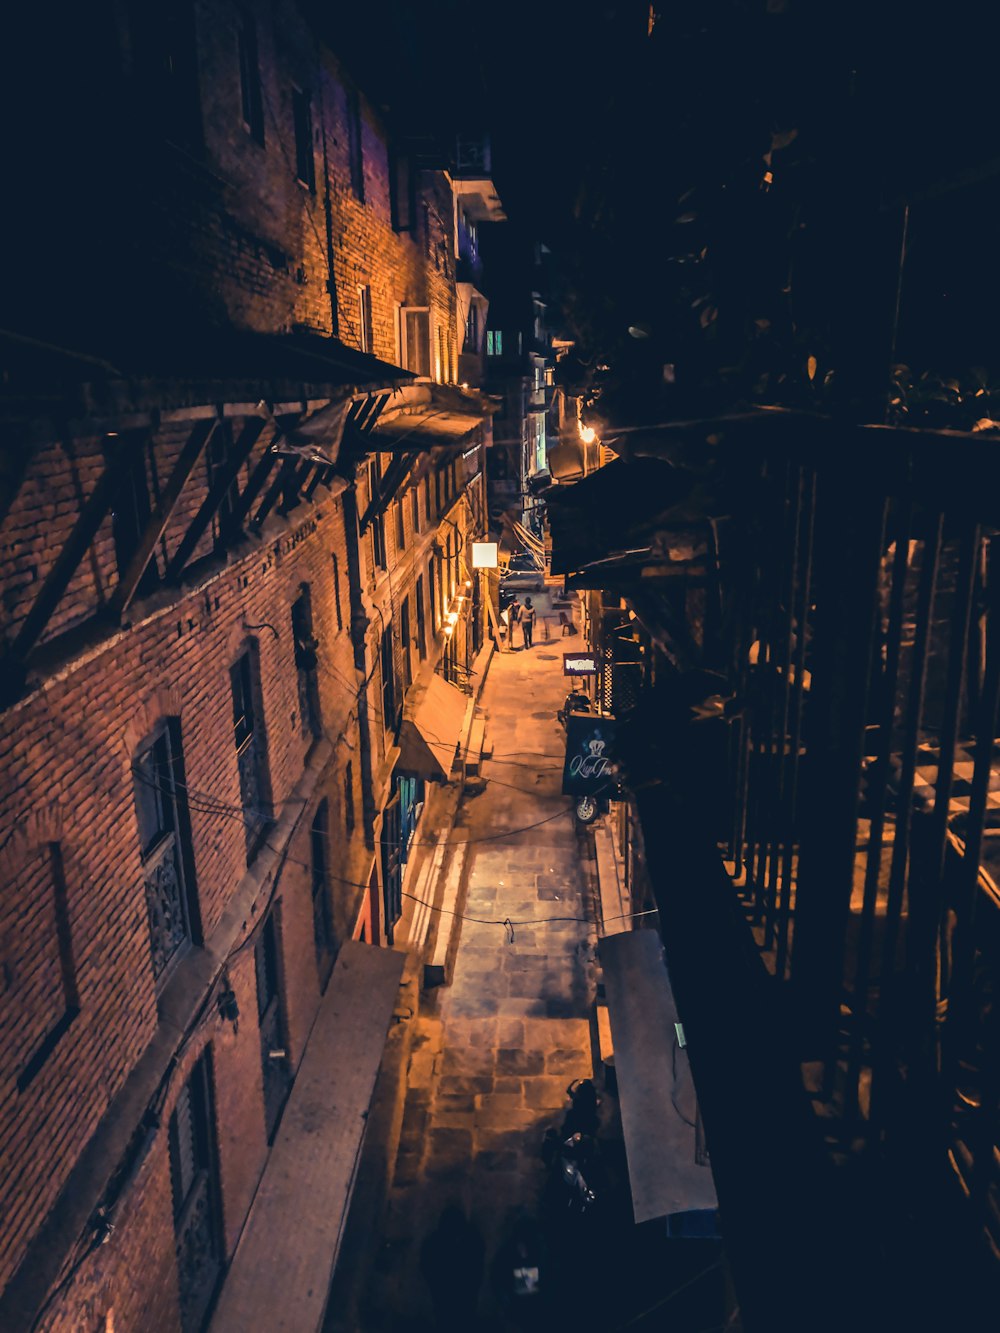 sidewalk of a building during nighttime